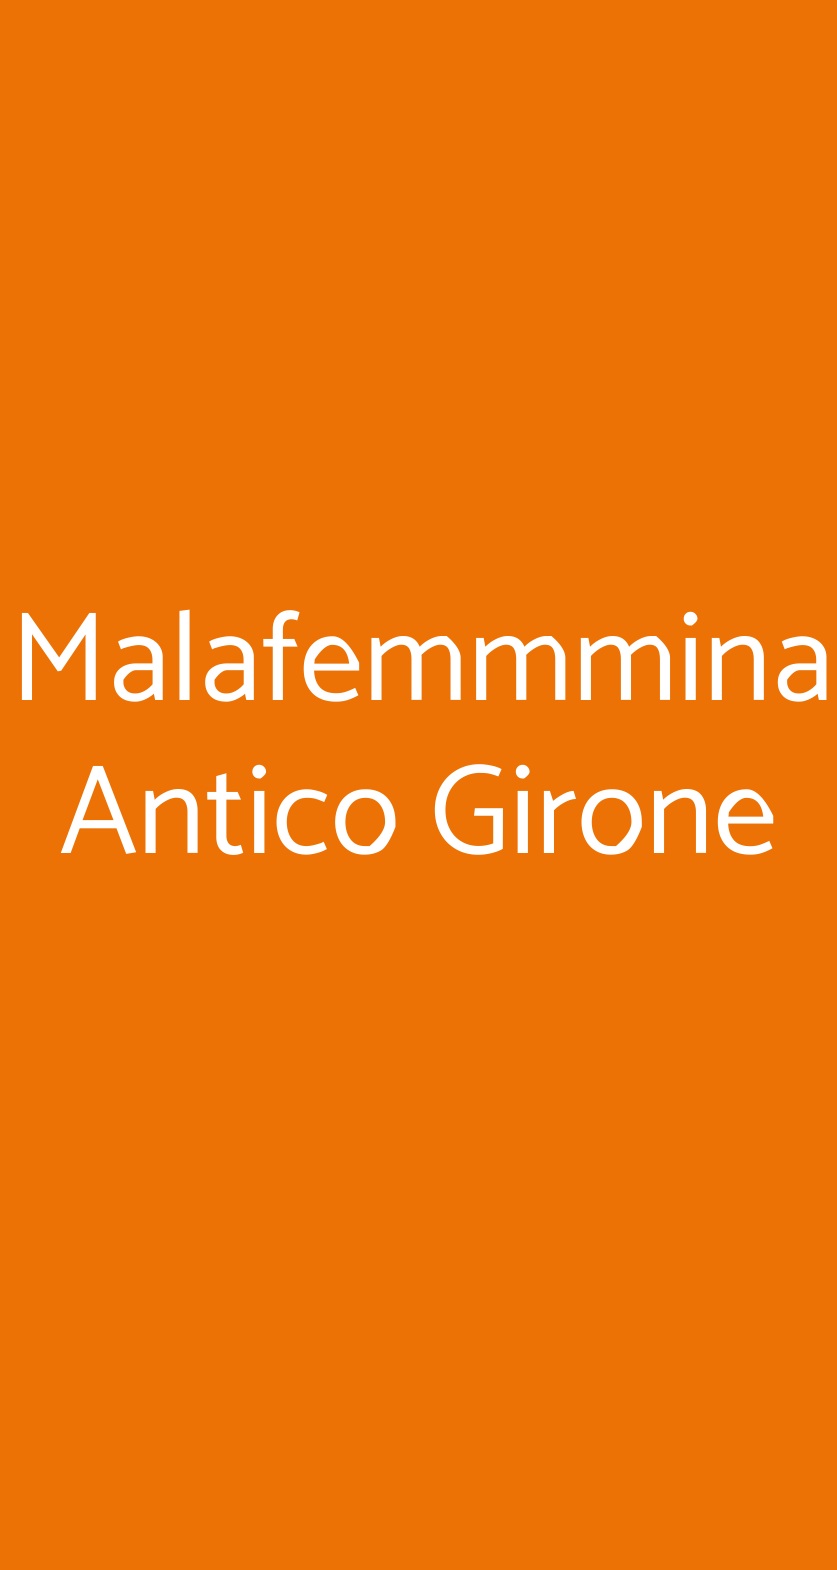 Malafemmmina Antico Girone Fiesole menù 1 pagina